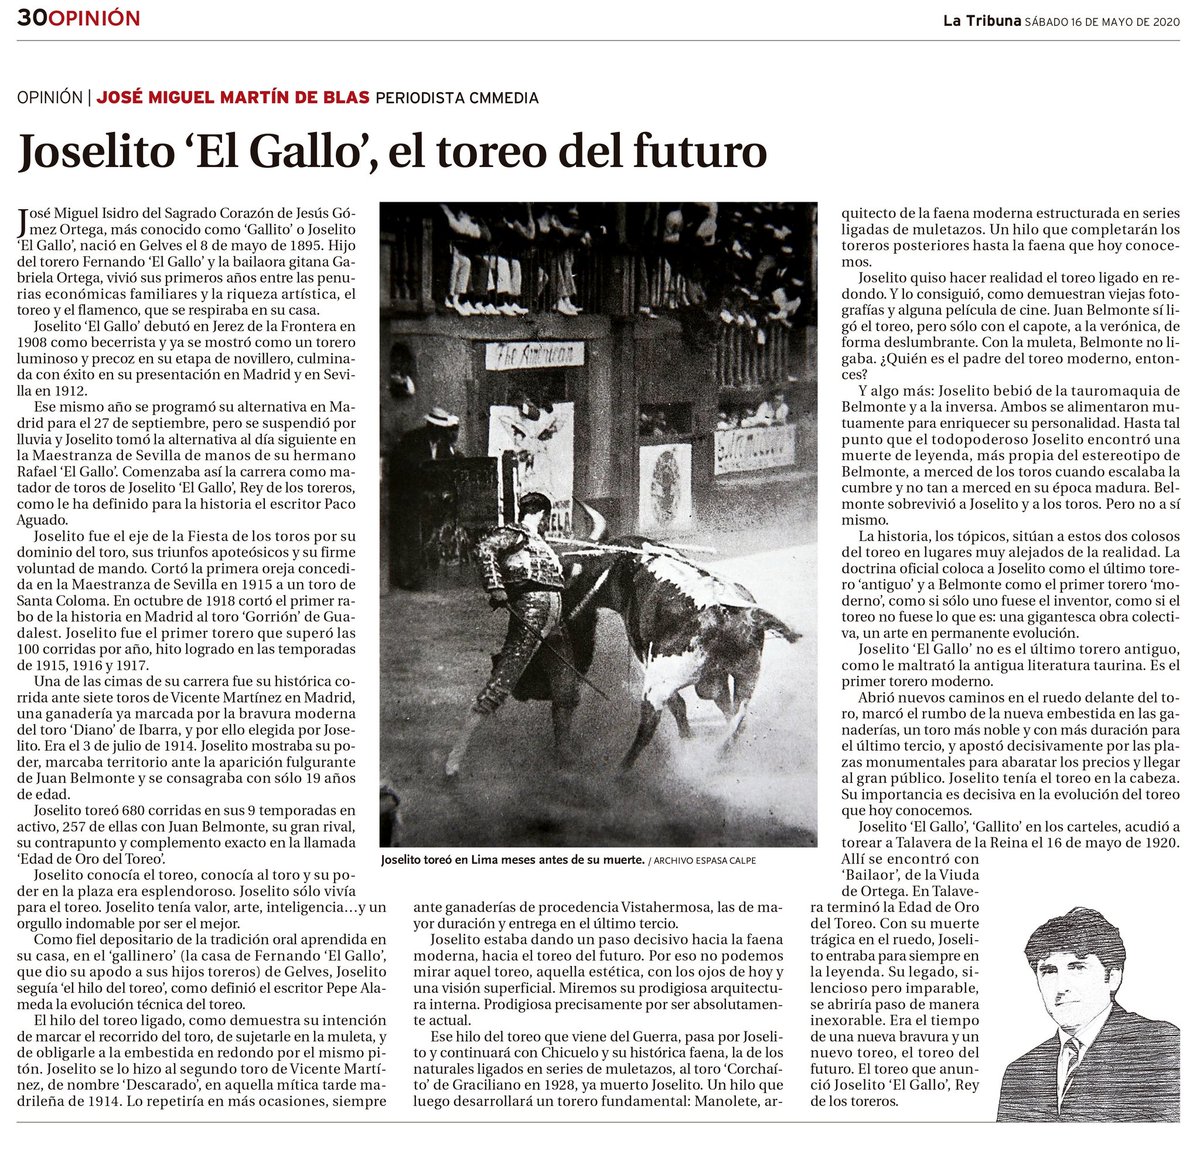 #16mayo Joselito El Gallo, el toreo del futuro. @tribunadetoledo